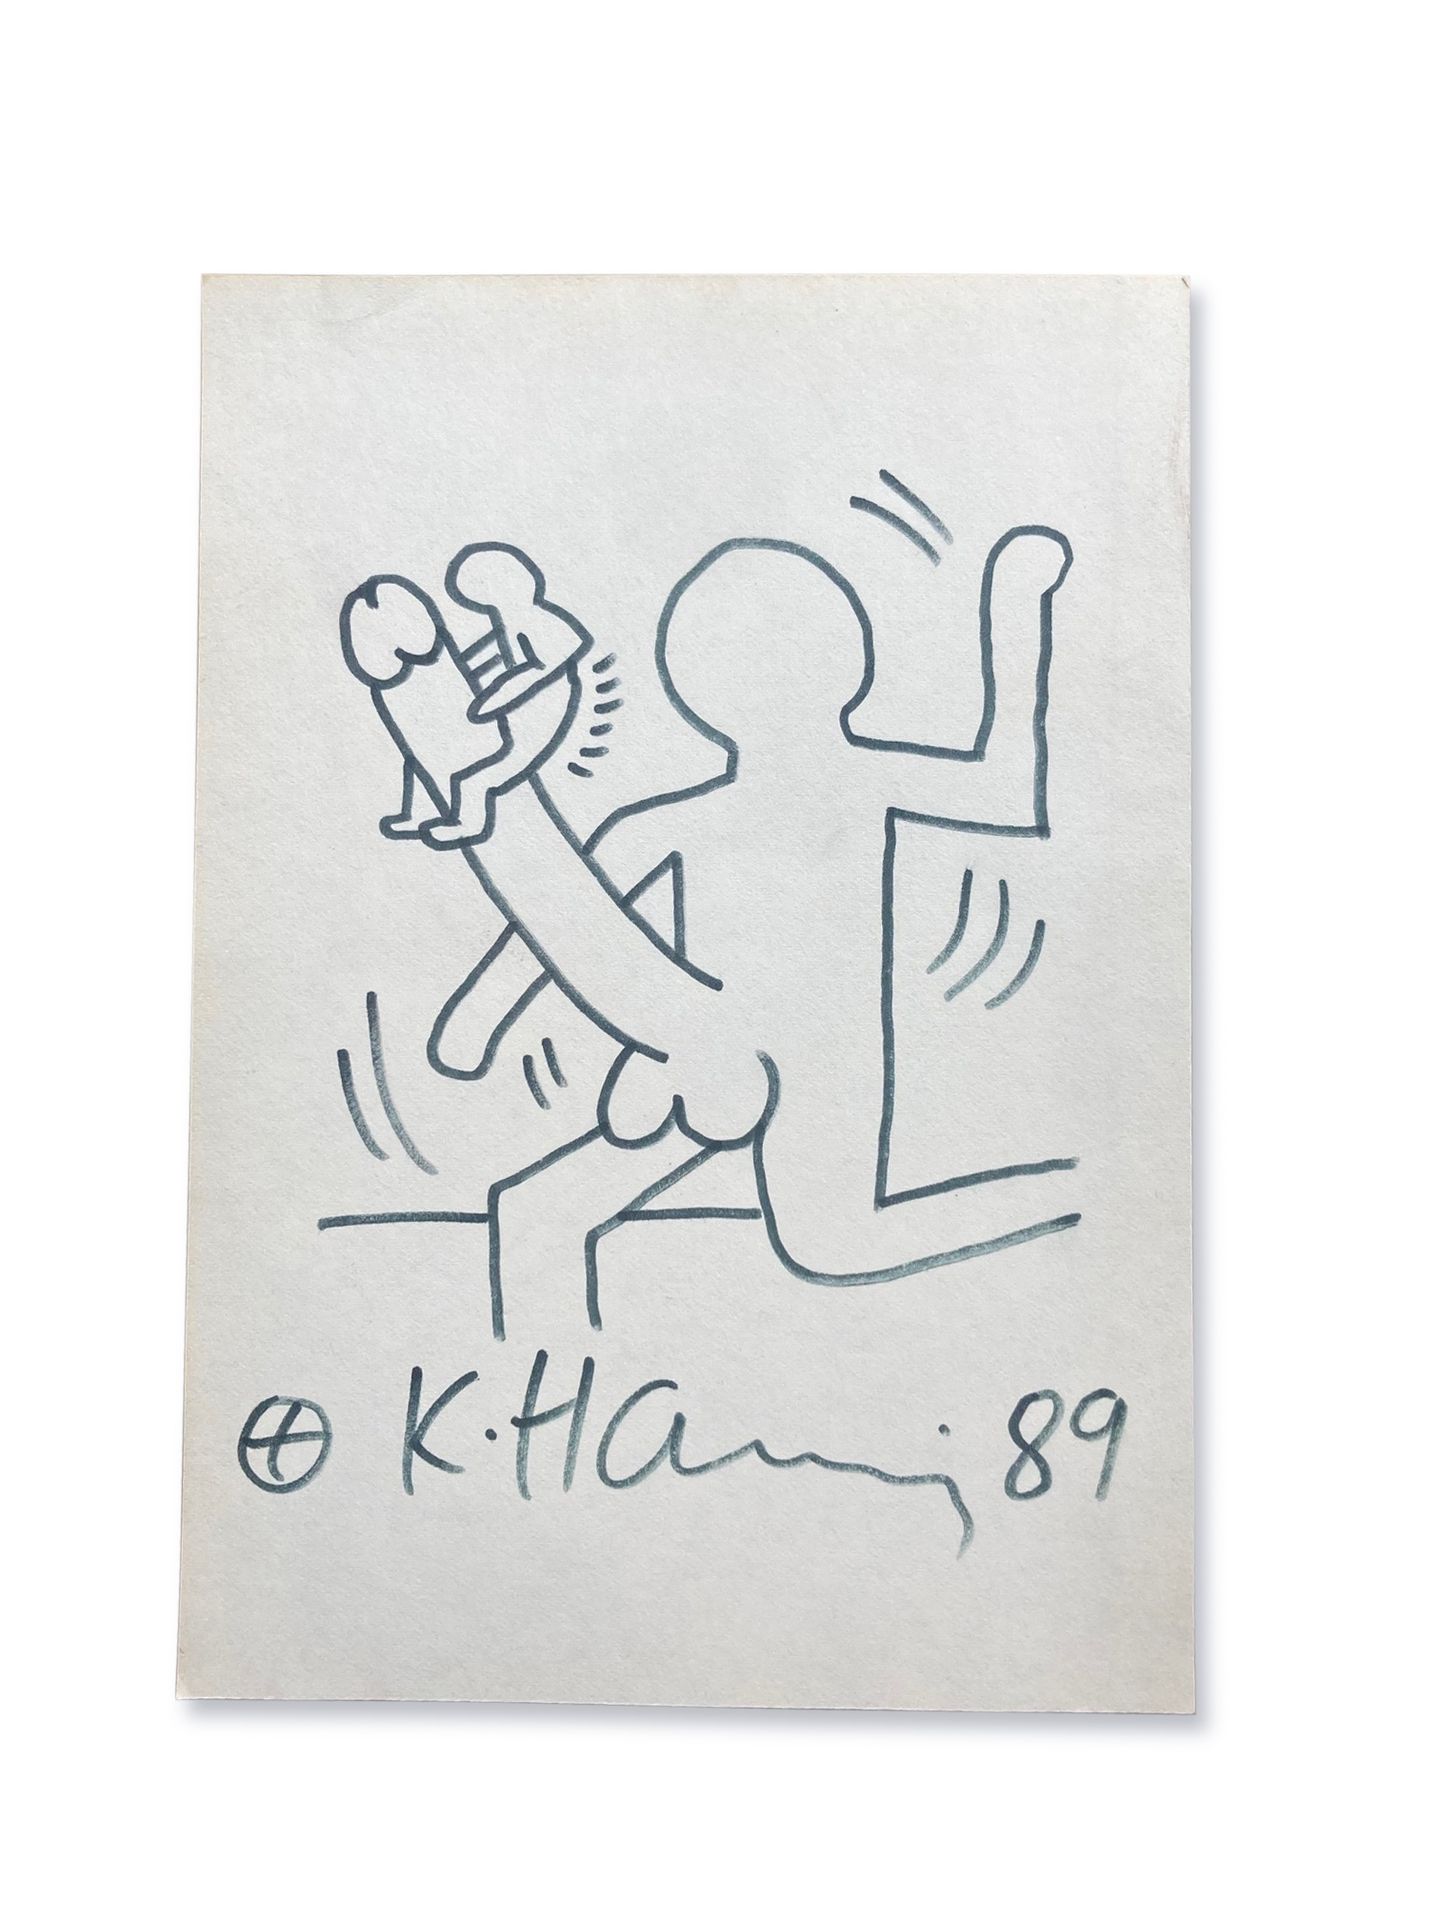 Keith HARING (1958-1990) (Attr.) Sas-titre, 1989
Disegno a penna su carta firmat&hellip;